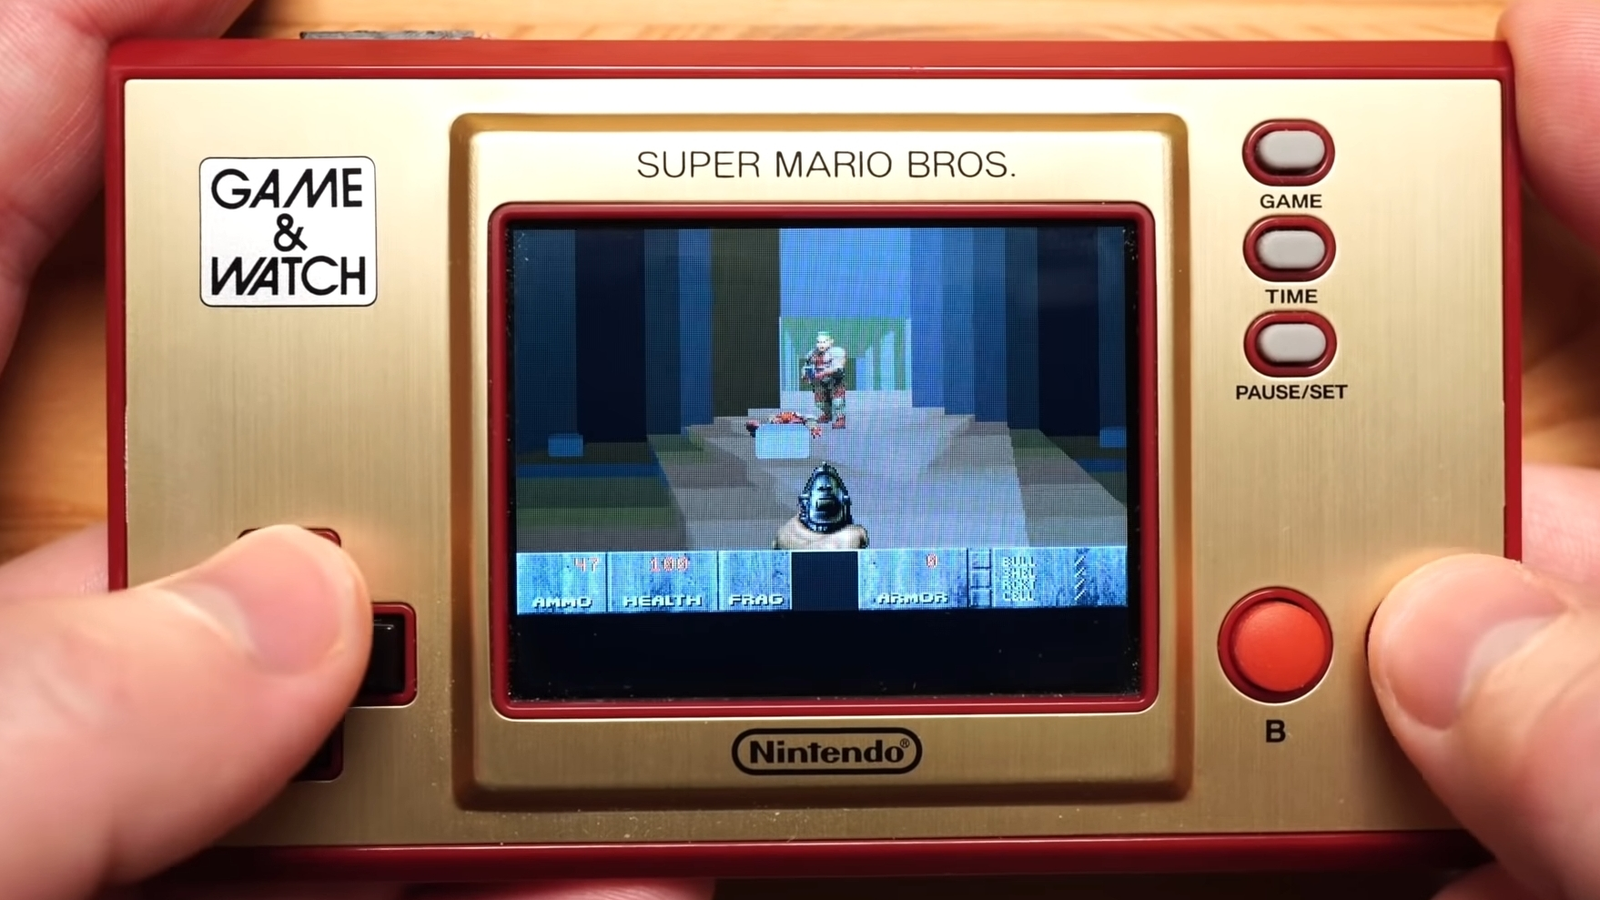 New Game & Watch Super Mario Bros Nintendo handheld Game Welcome